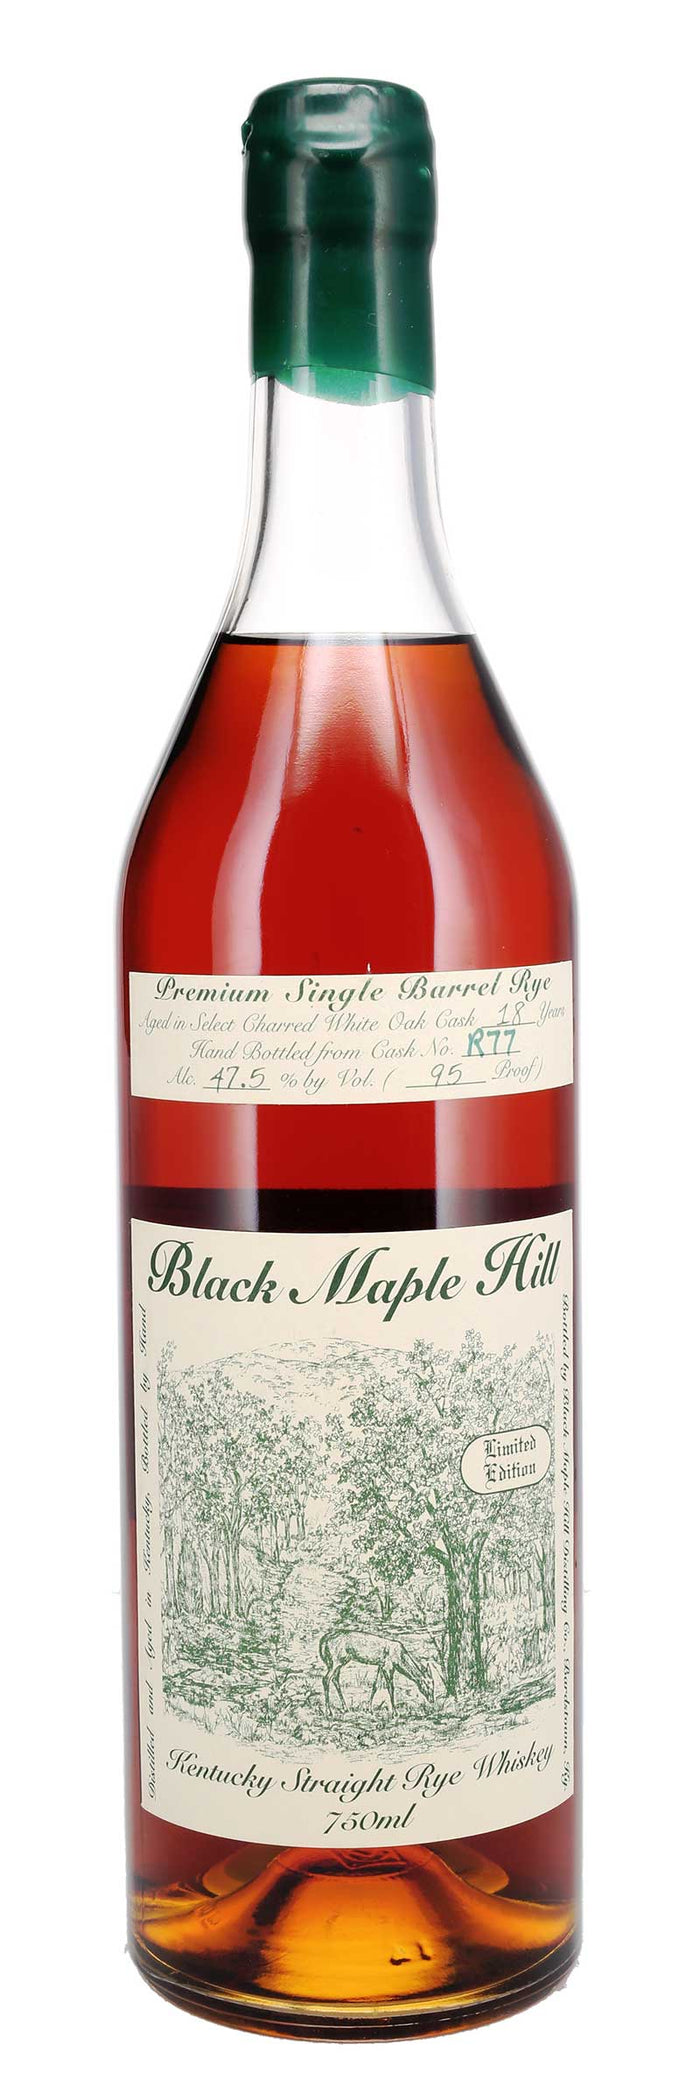 Black Maple Hill 18 Year Cask R77 Single Barrel Kentucky Straight Rye Whiskey